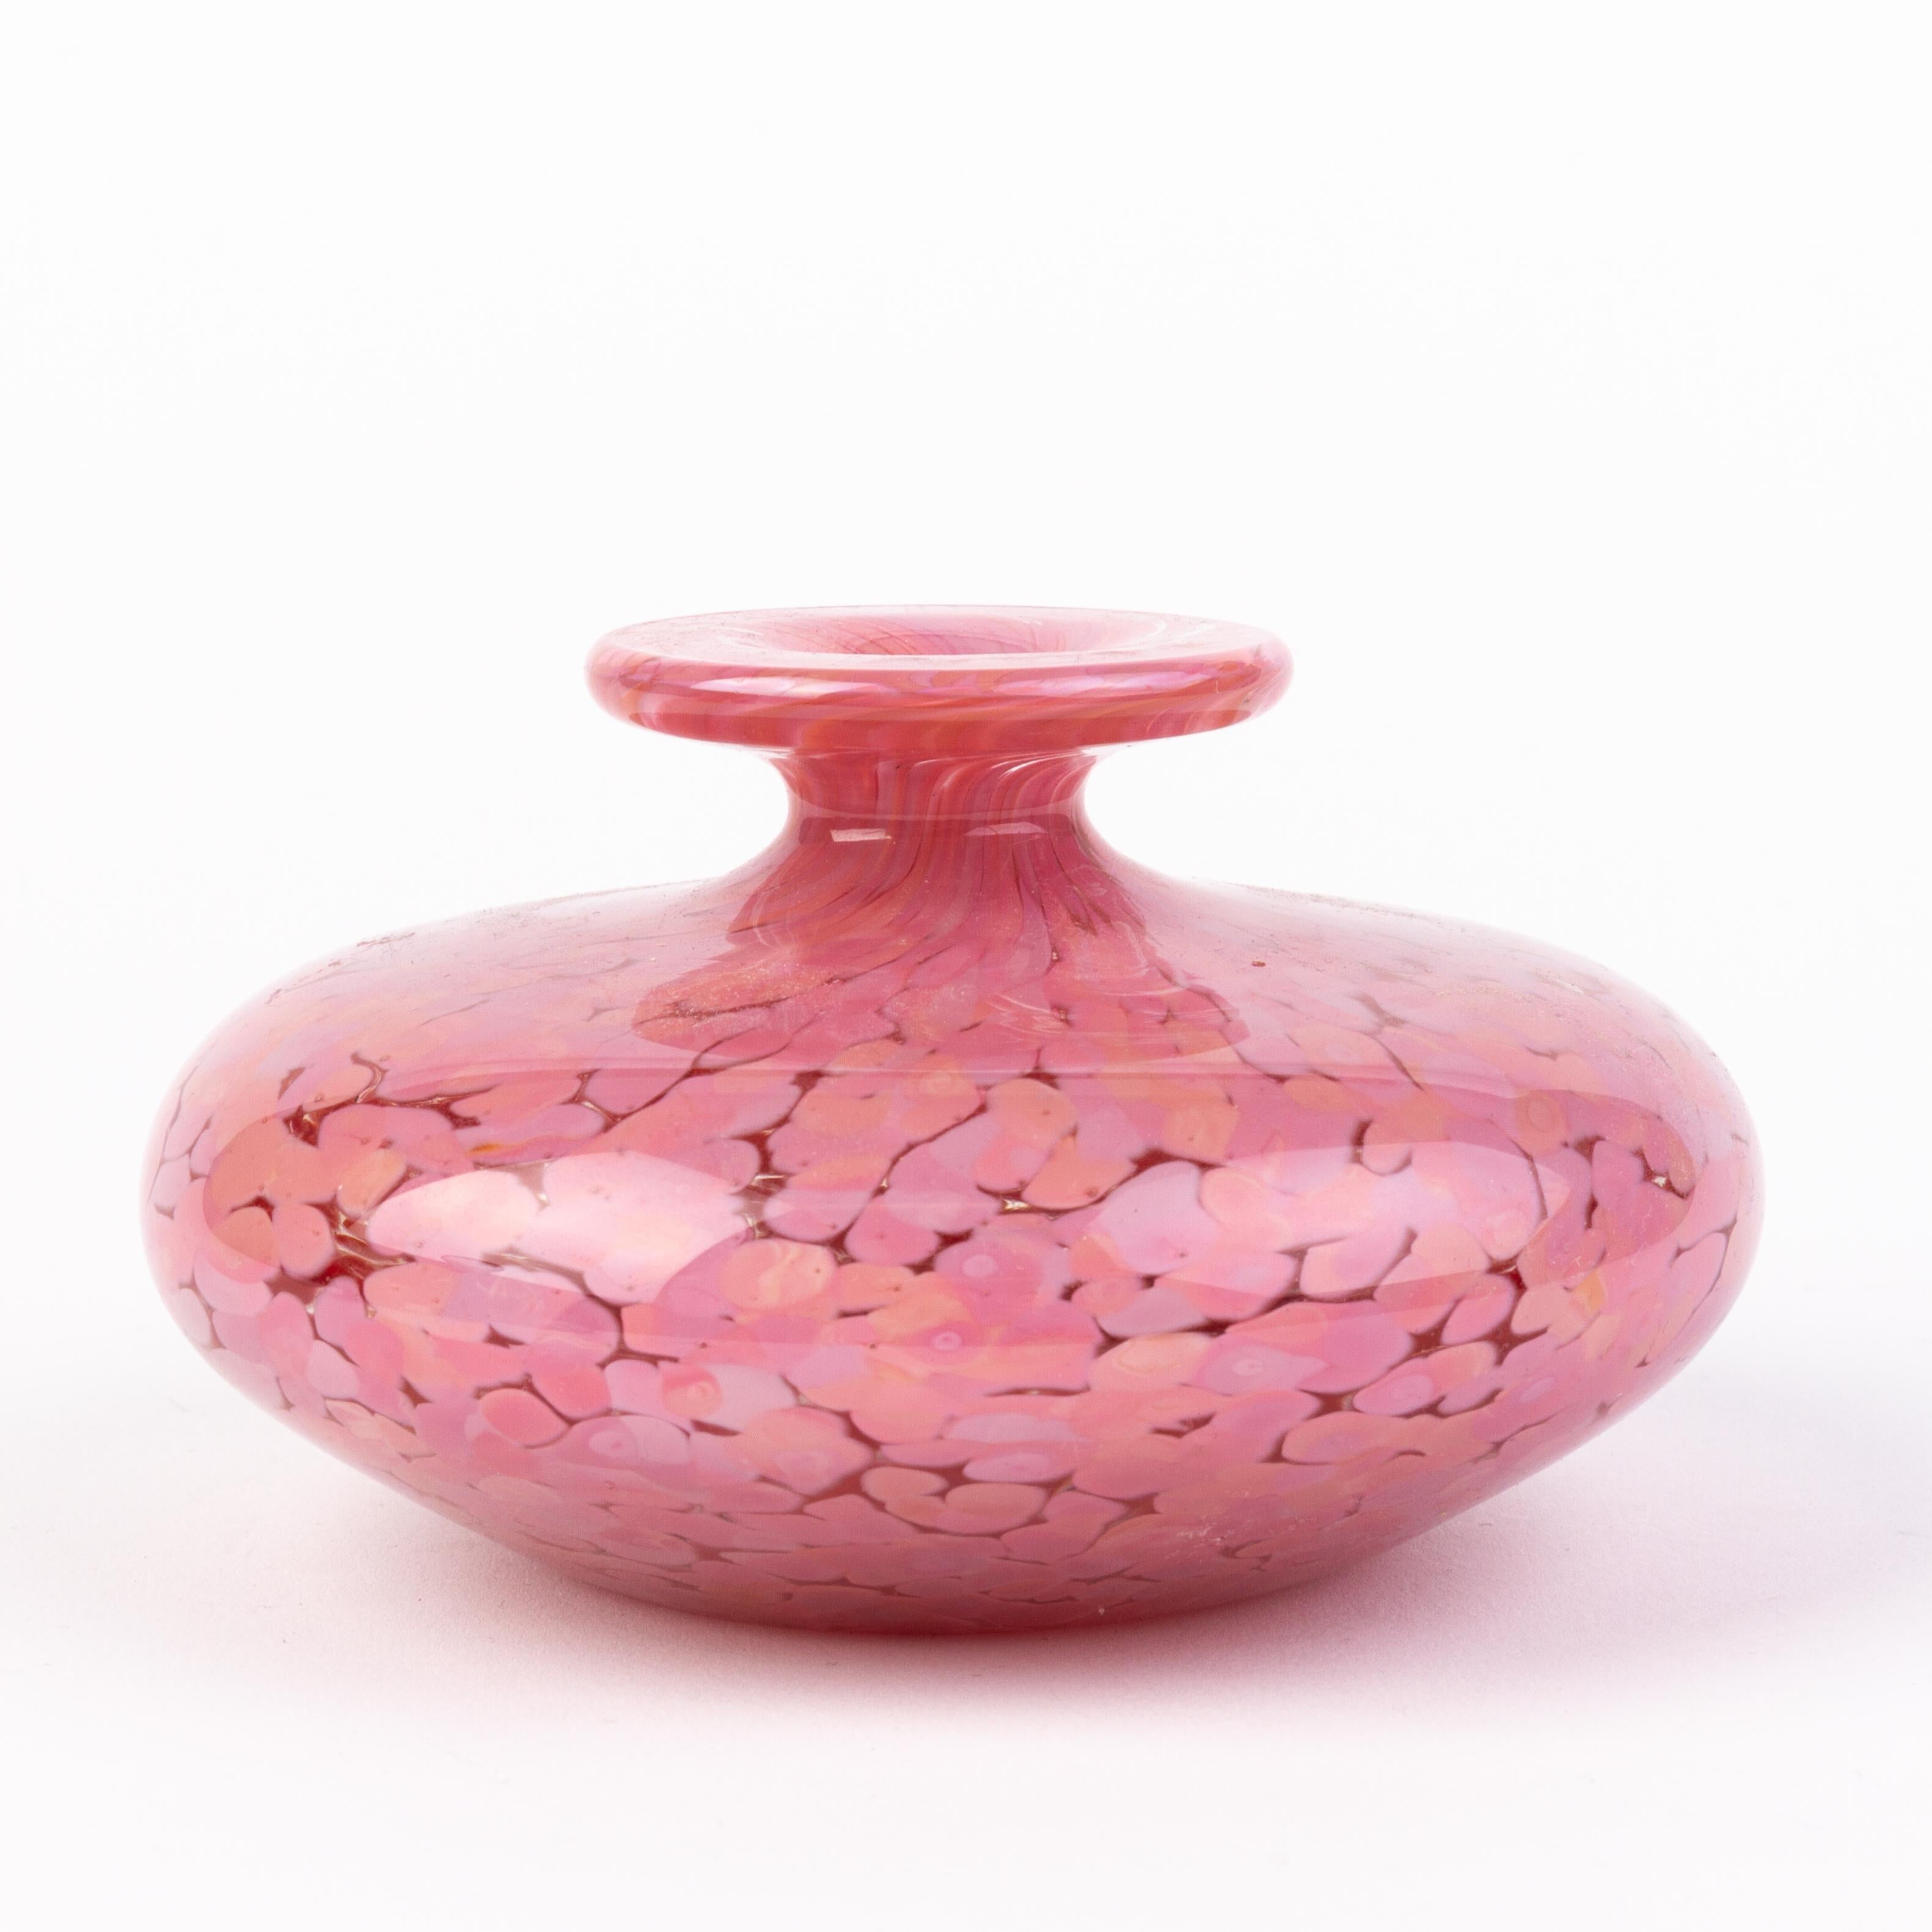 Signed Mdina Maltese Glass Designer Vase
Good condition
Free international shipping.